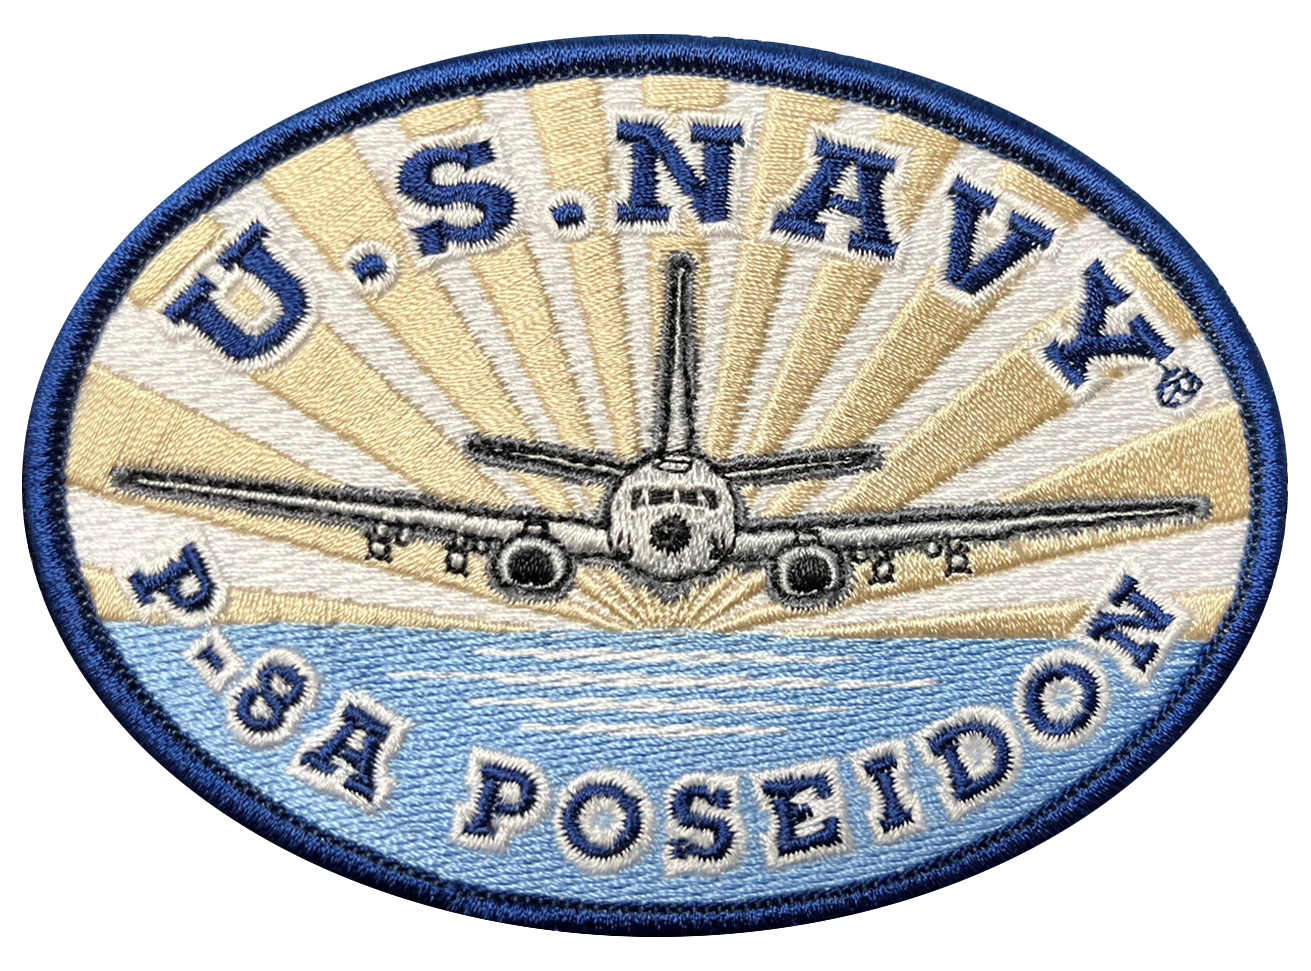 PAT-U.S. NAVY P-8A POSEIDON@